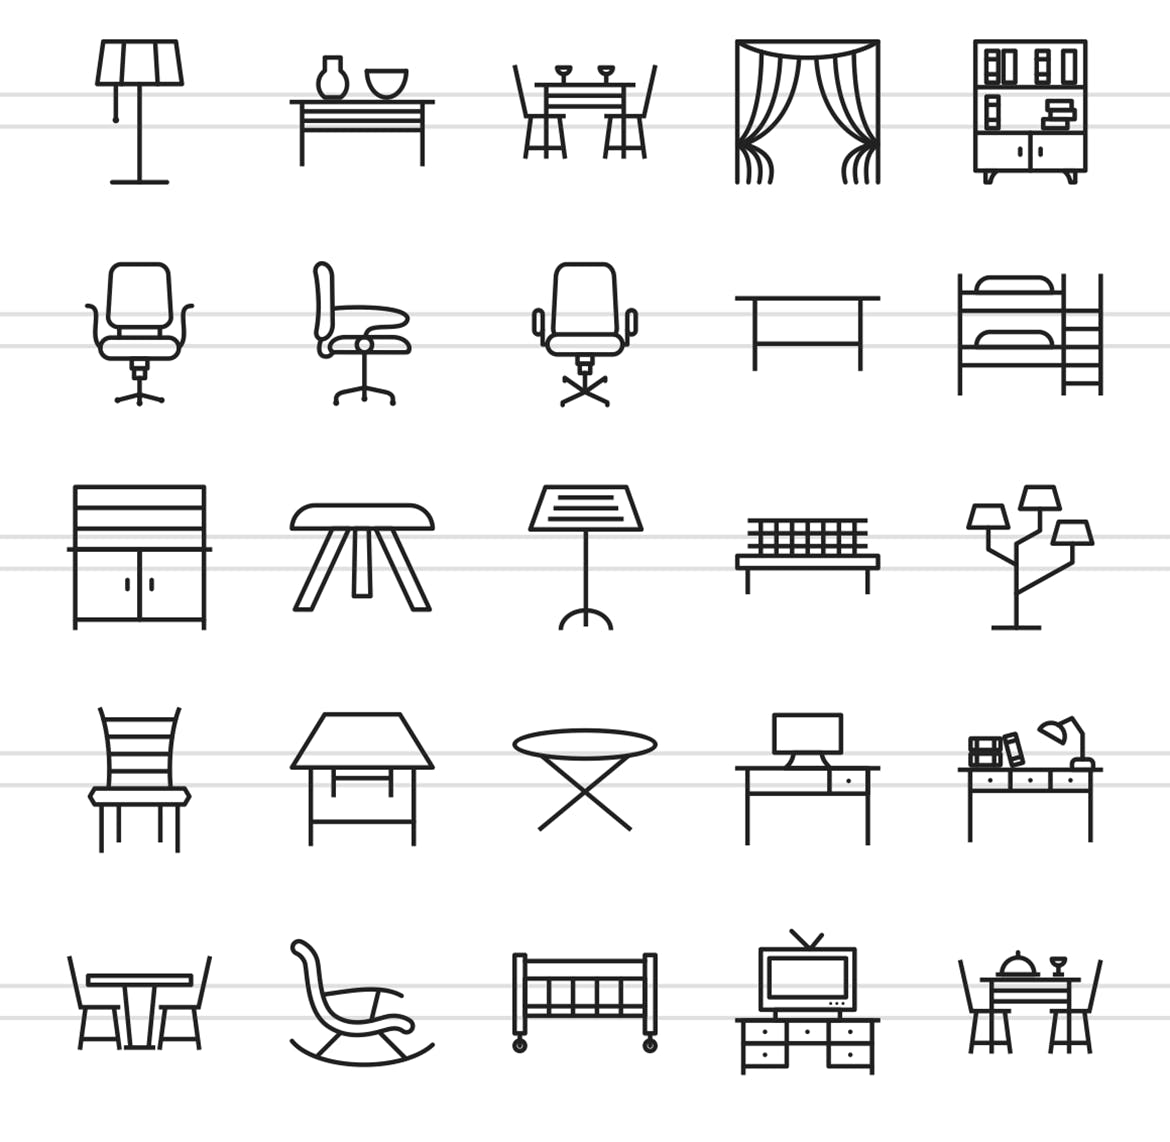 50枚家具系列线性蚂蚁素材精选图标 II 50 Furniture Line Icons Season II插图(2)